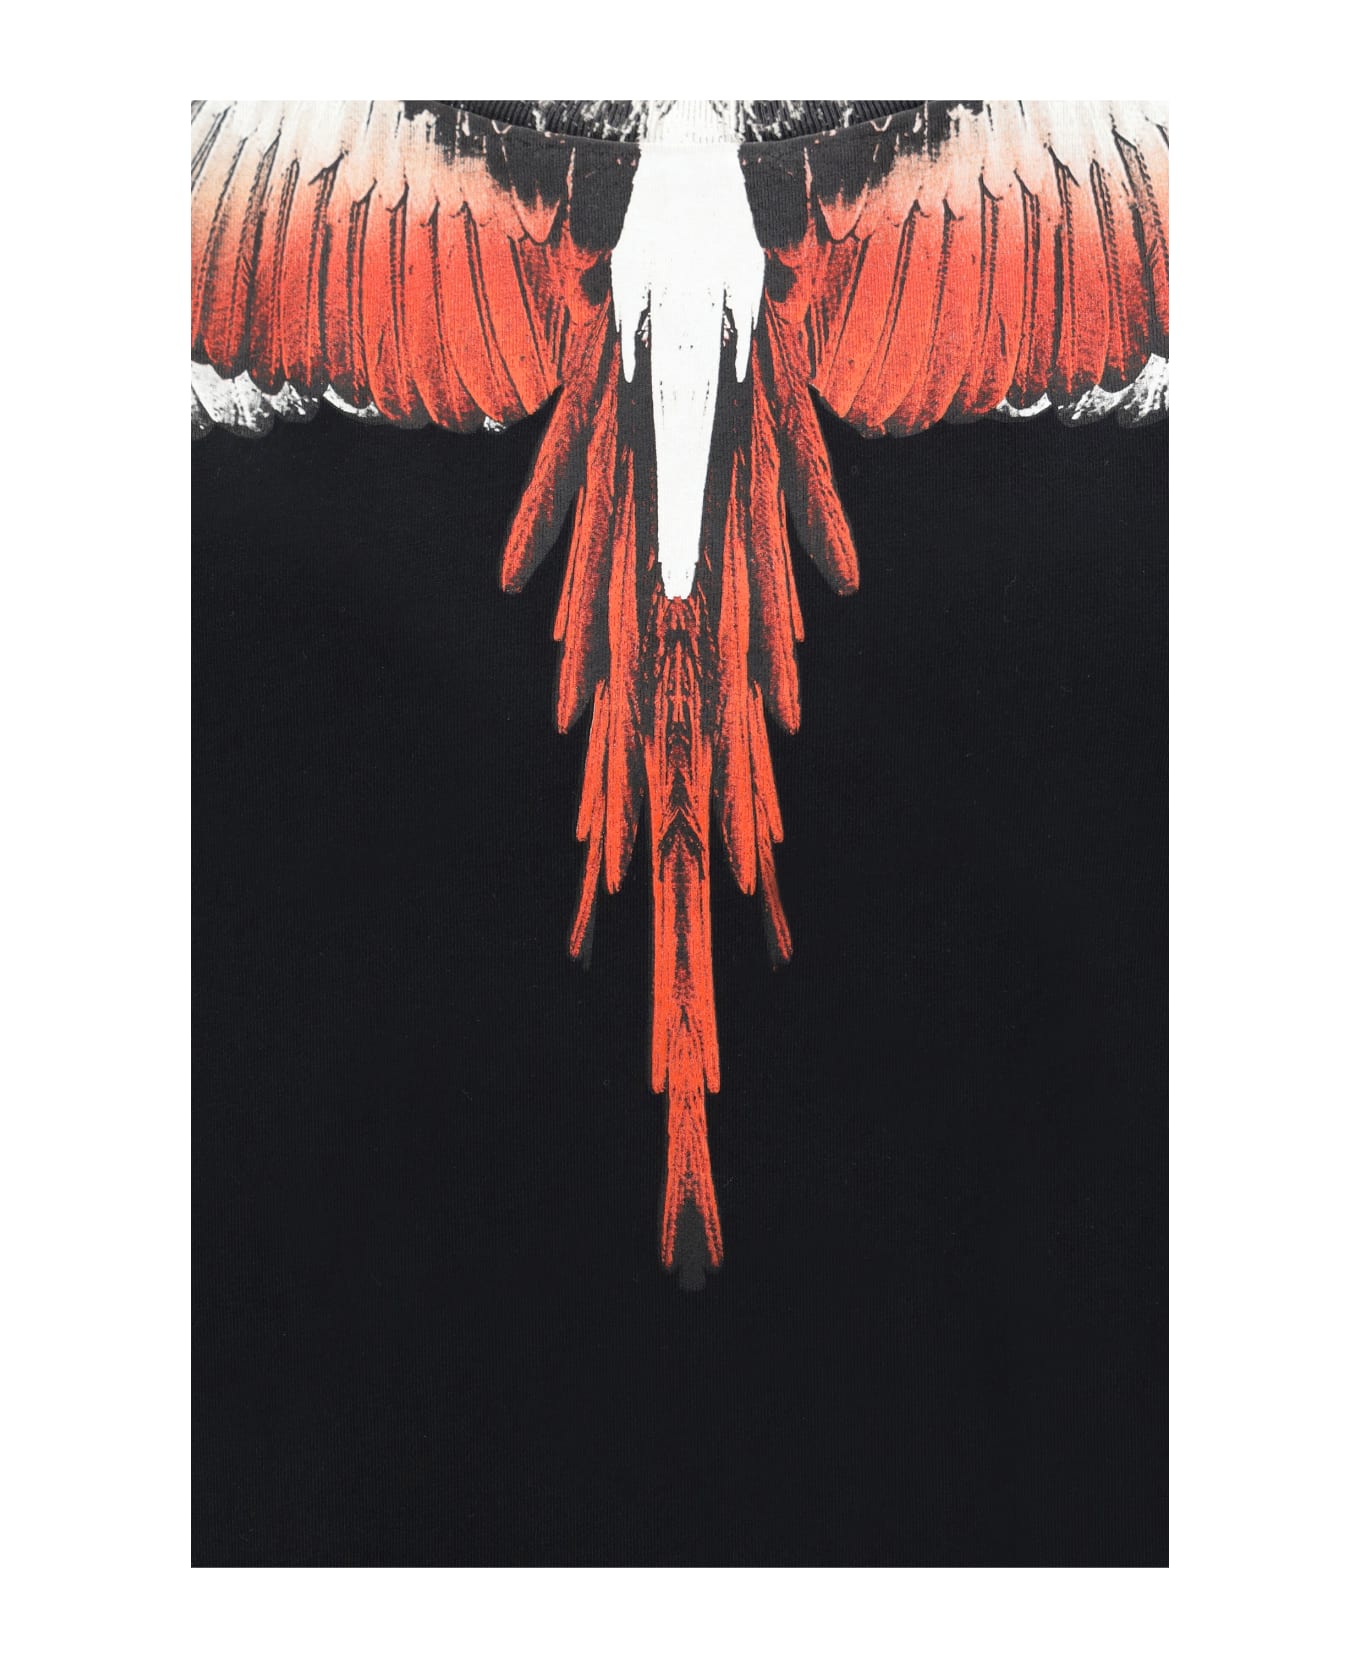 Marcelo Burlon Icon Wings T-shirt - Black Red